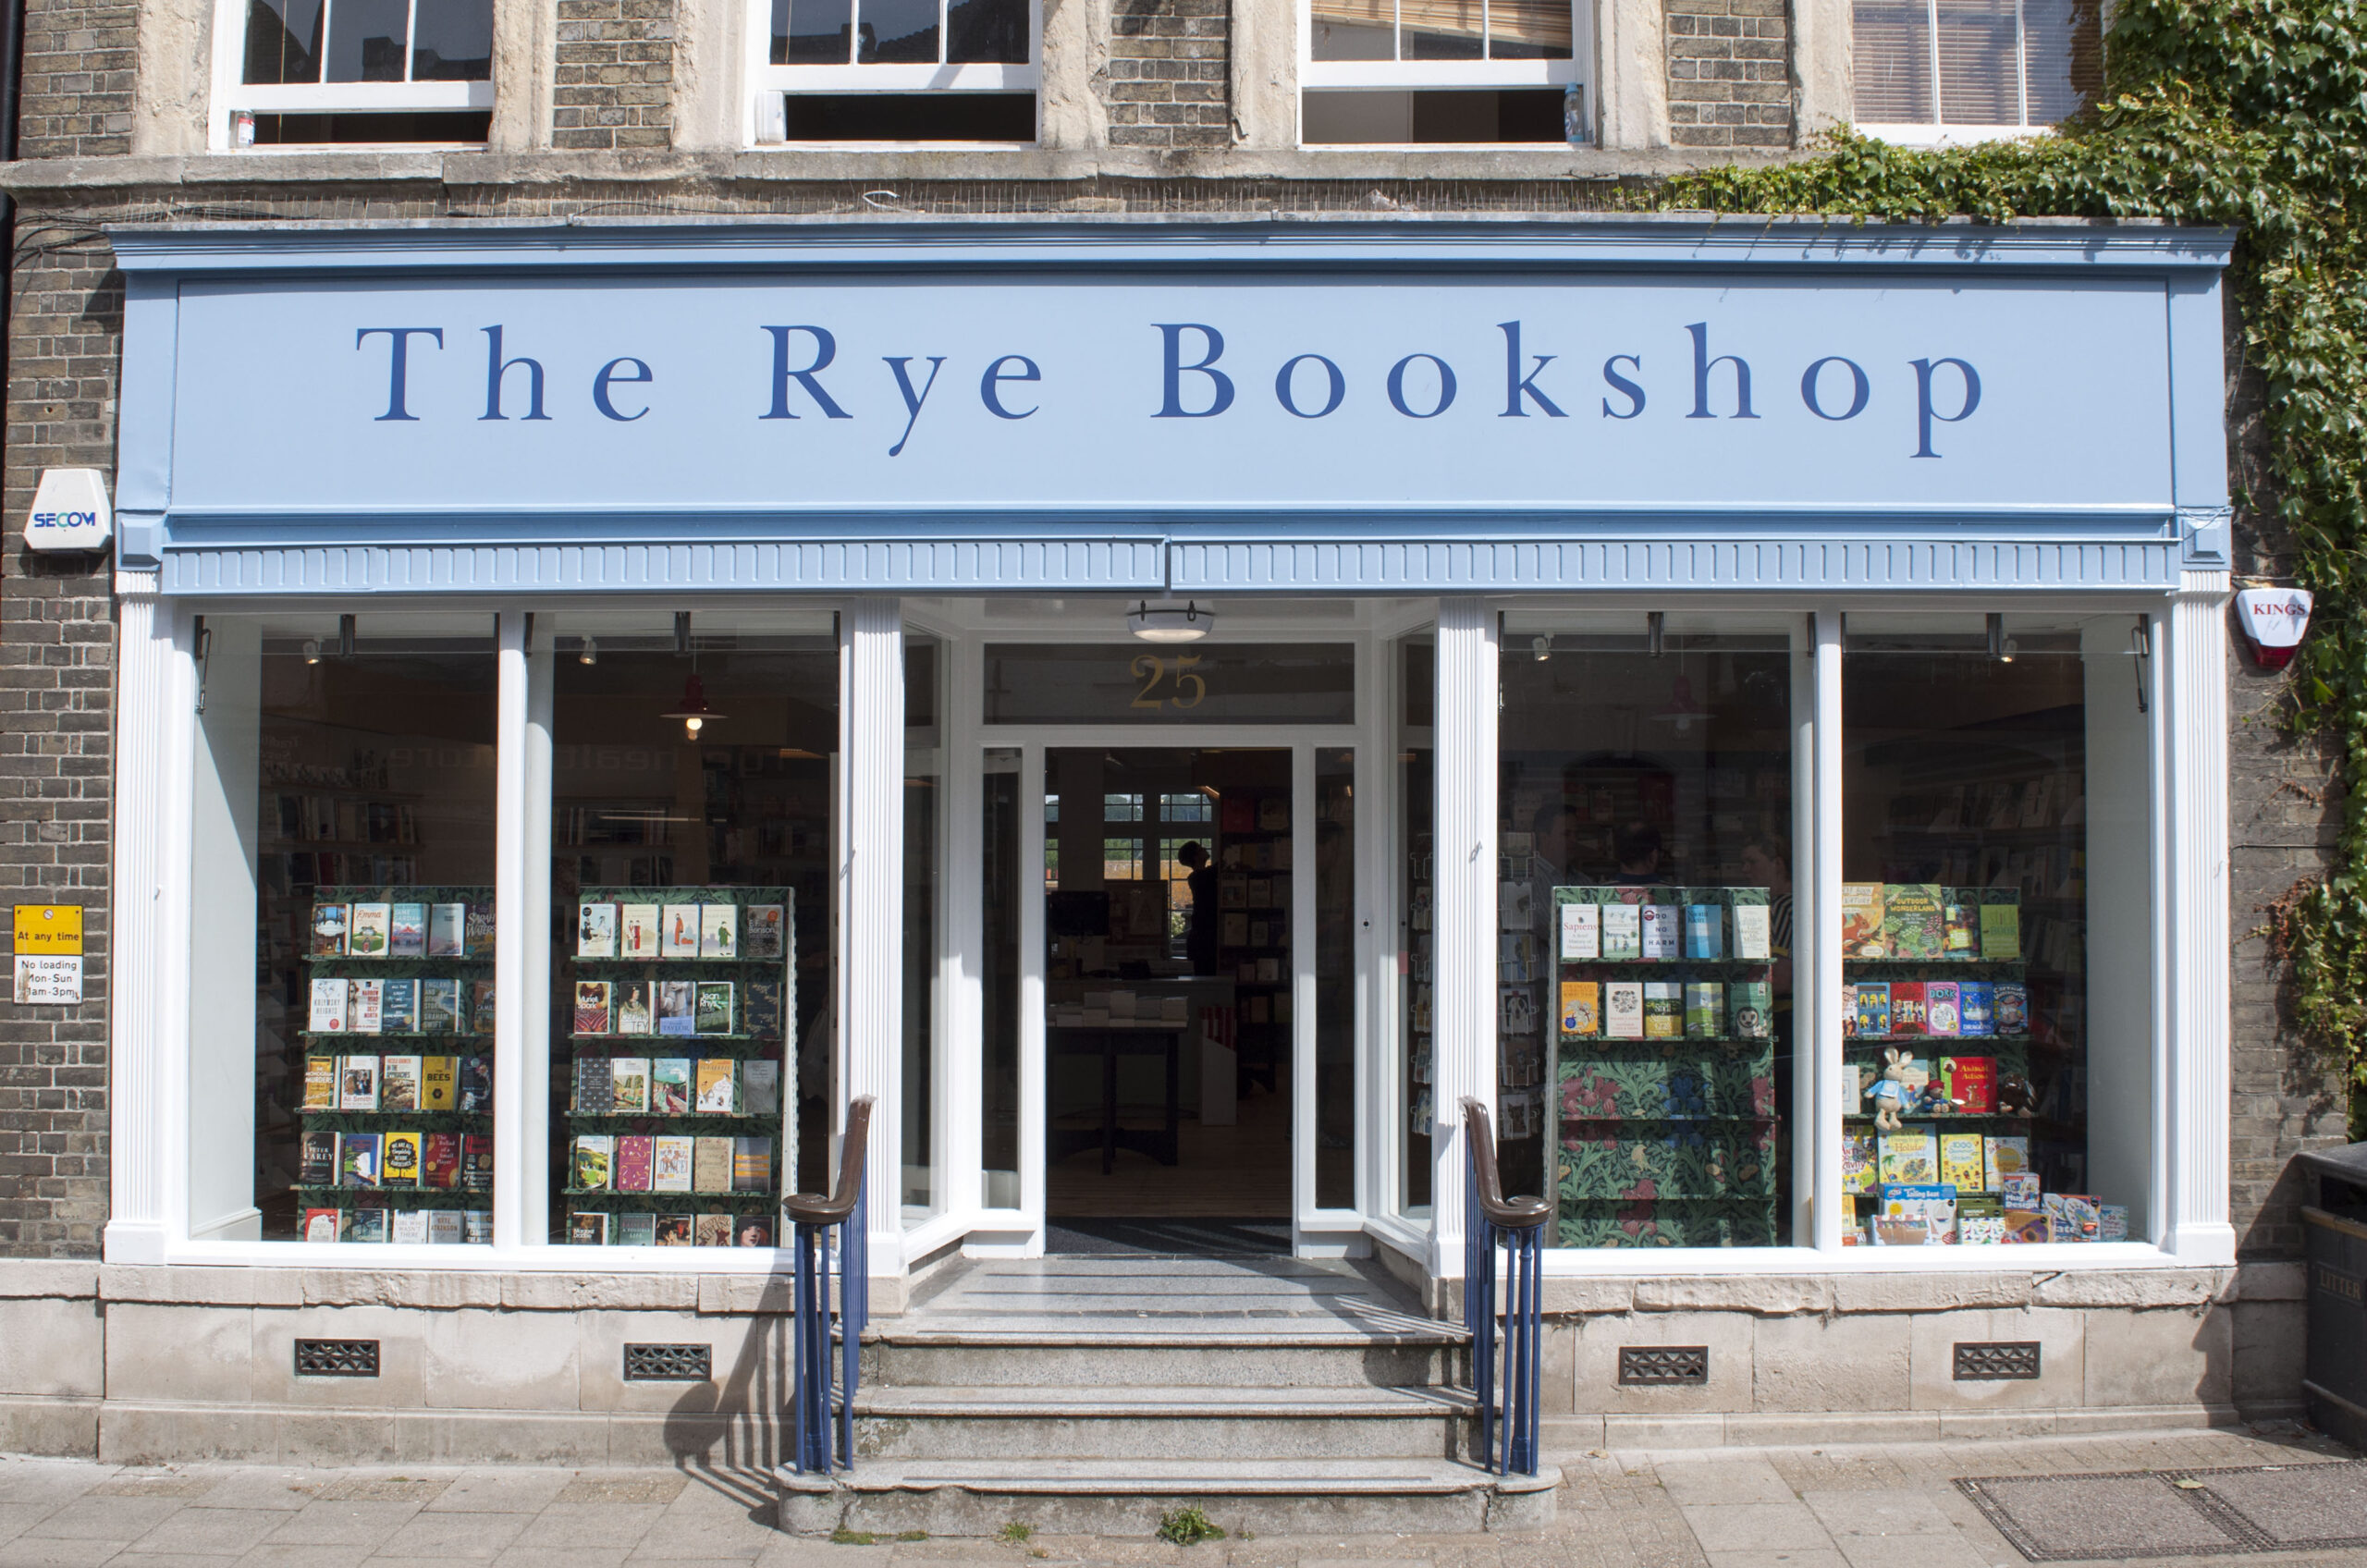 The Rye Bookshop